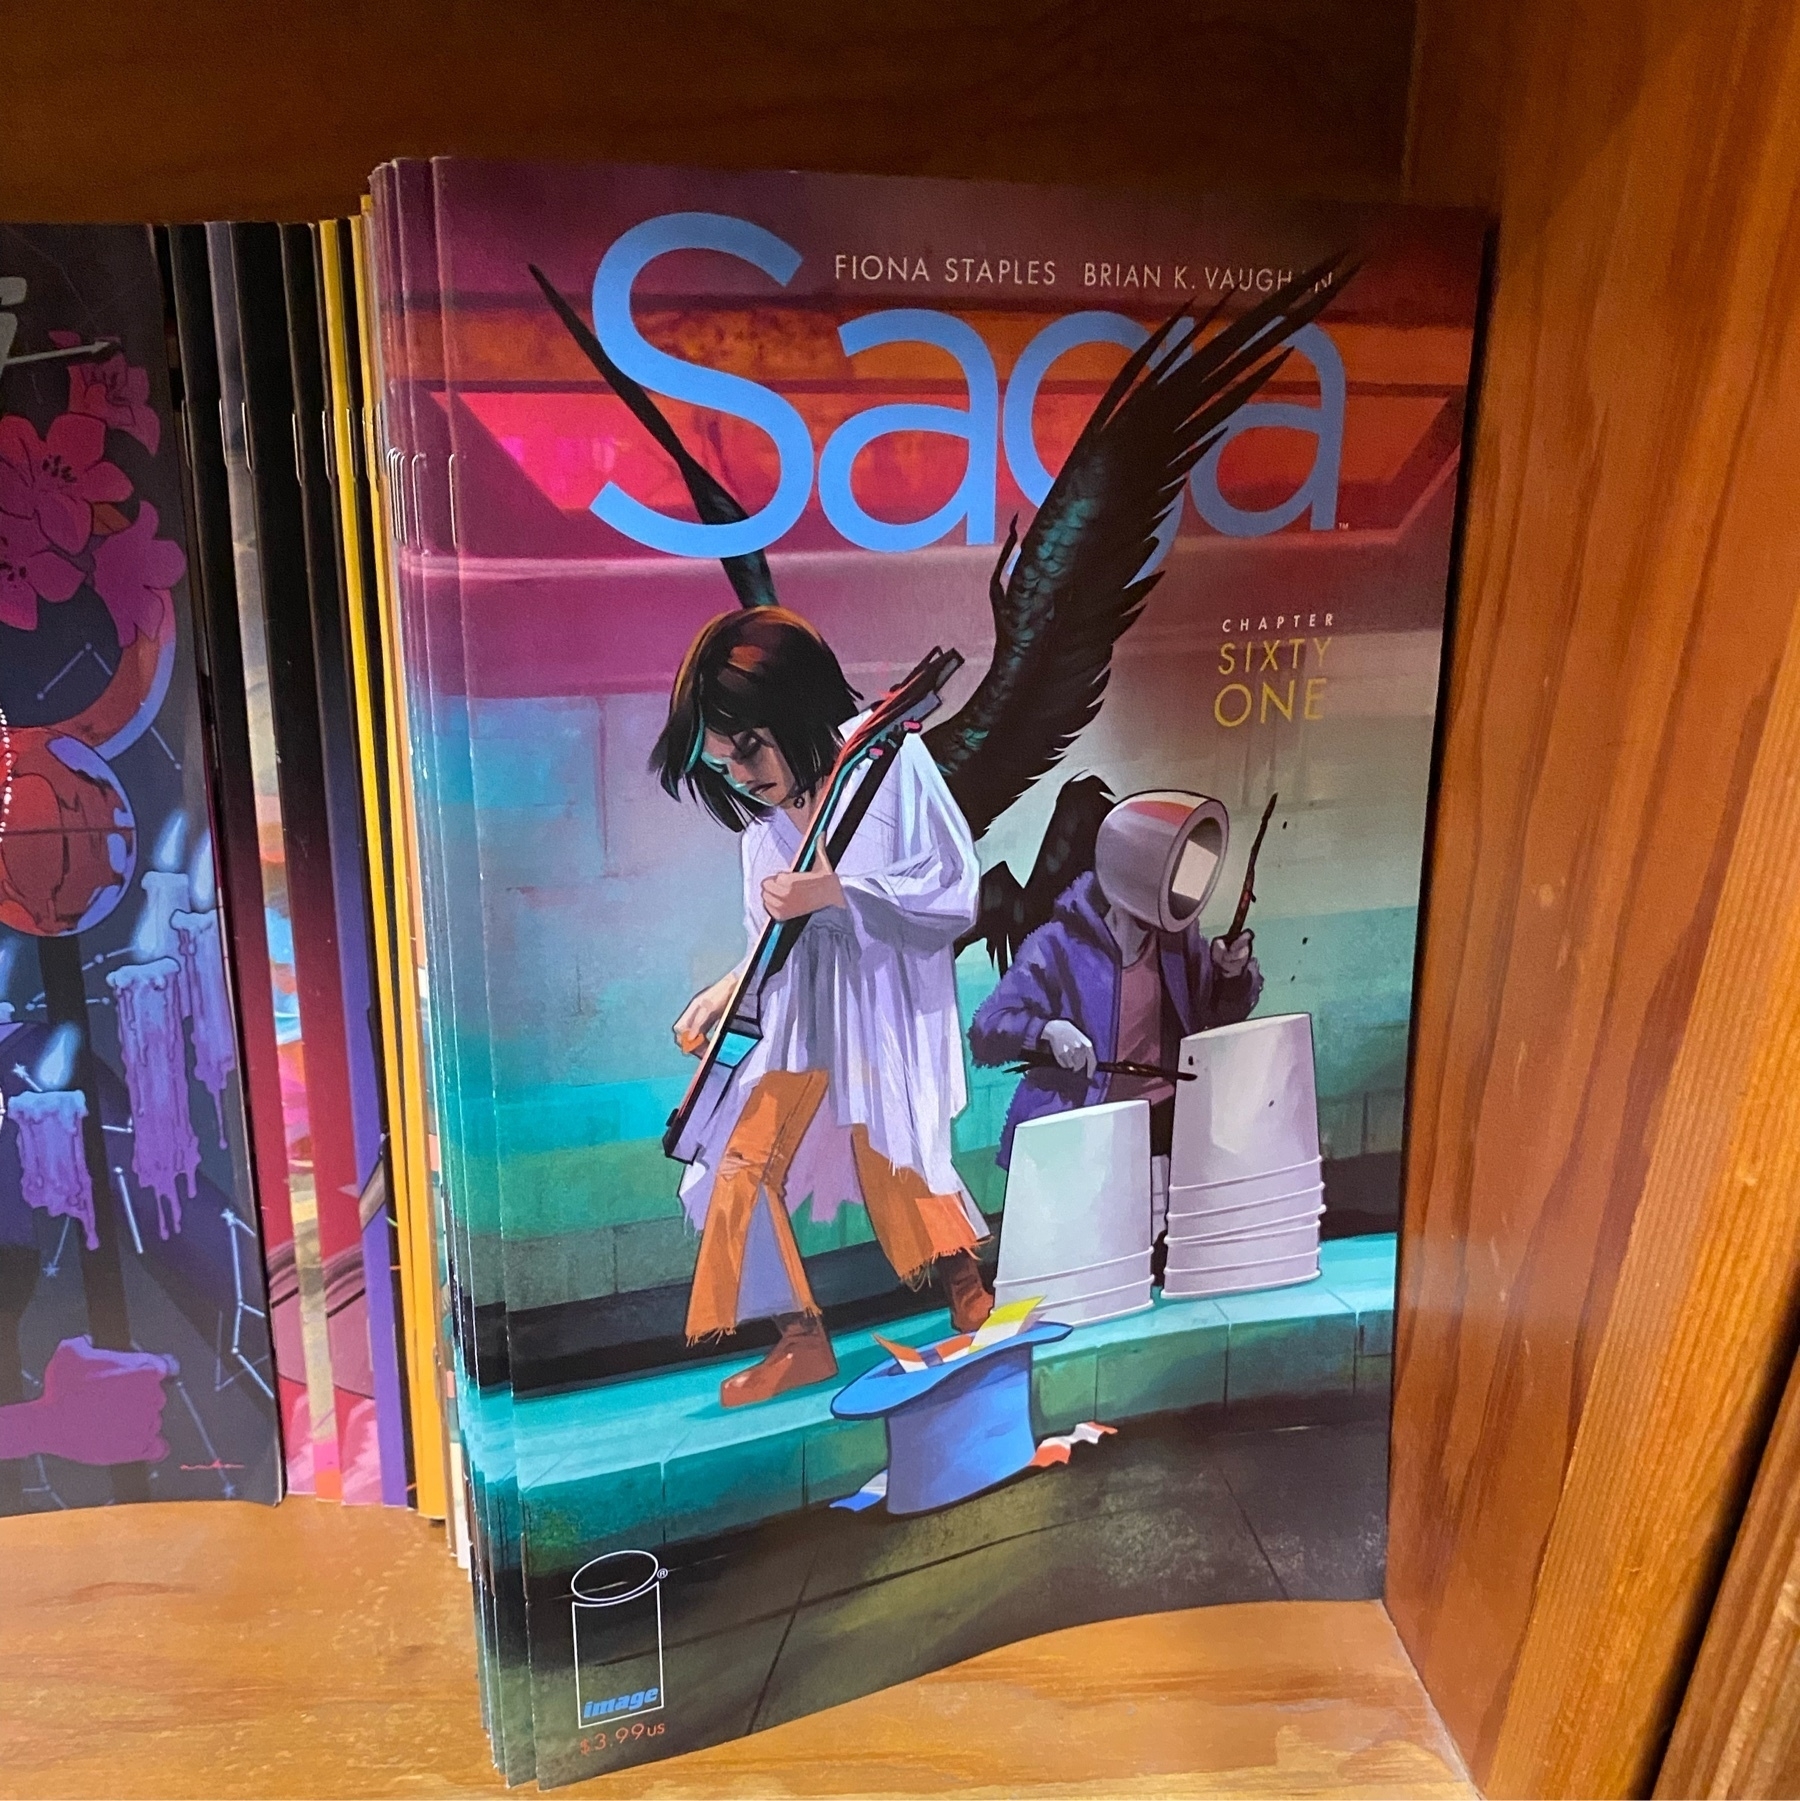 Stack of Saga #61 comic books on a shelf.